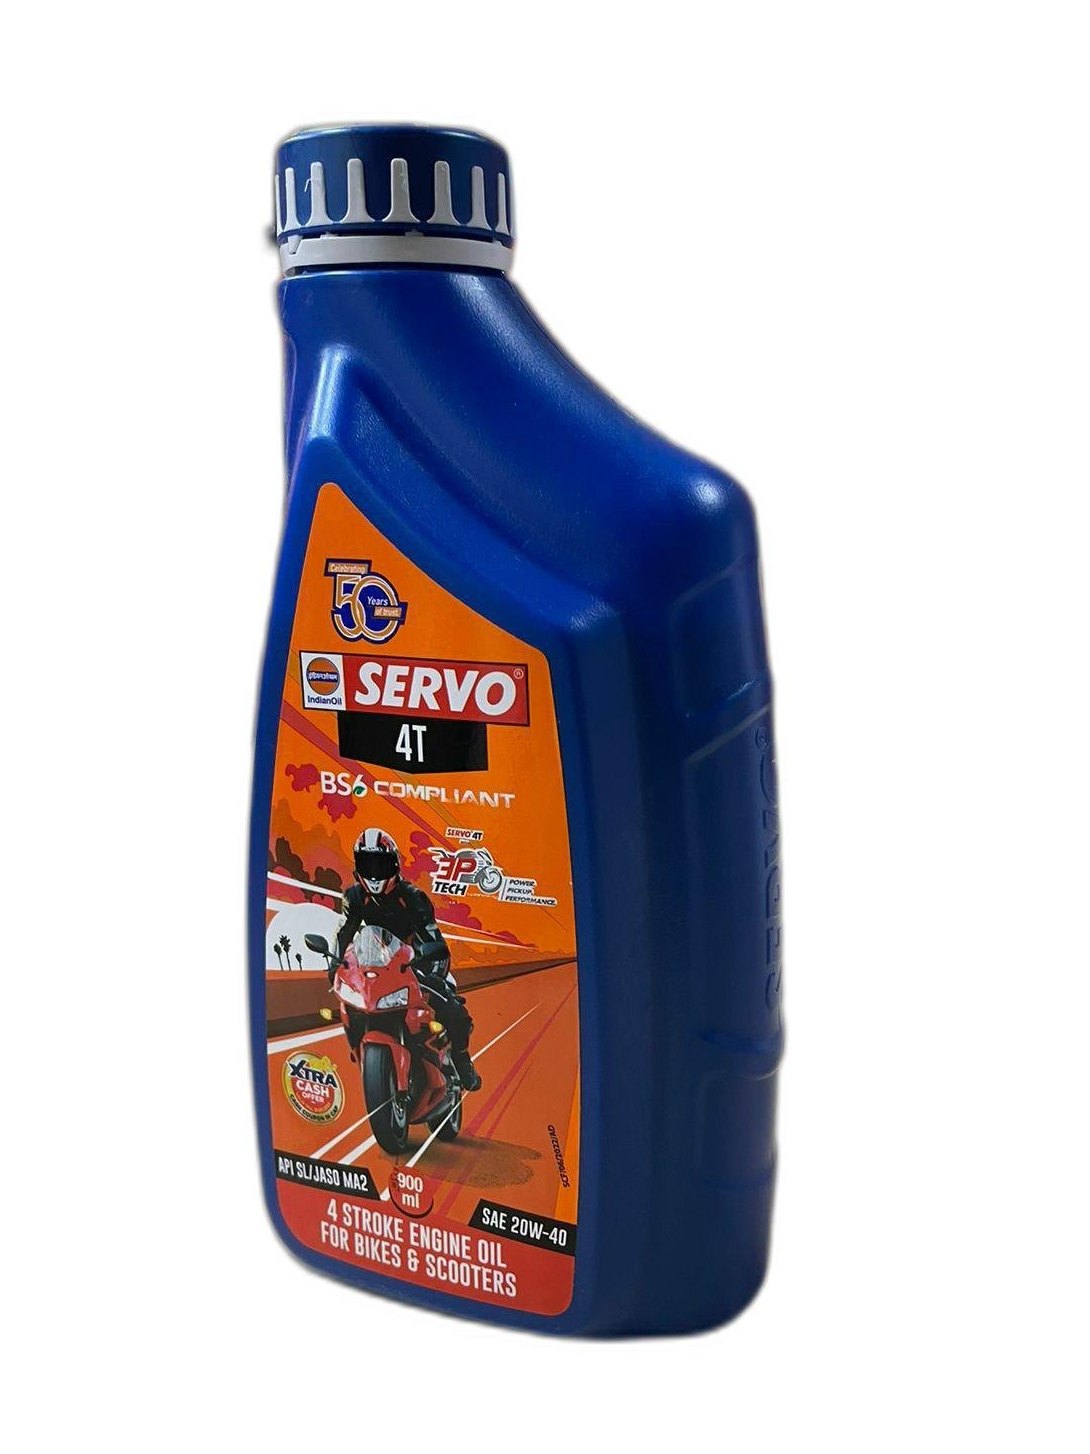 Best engine oil for bikes